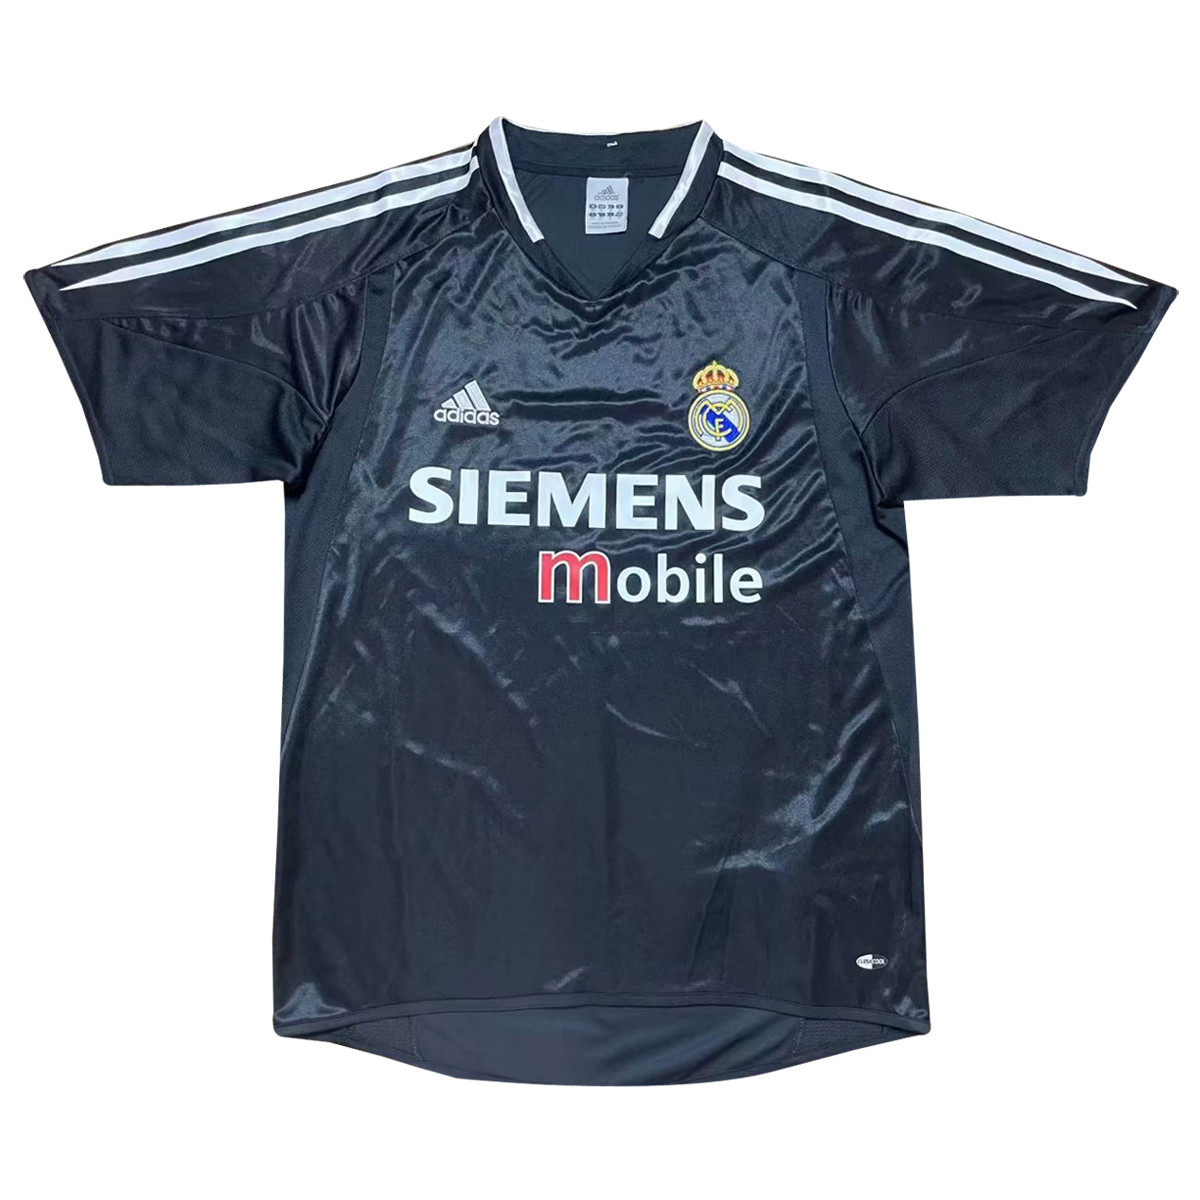 2014/15 Real Madrid Retro Third Soccer Football Kit Man